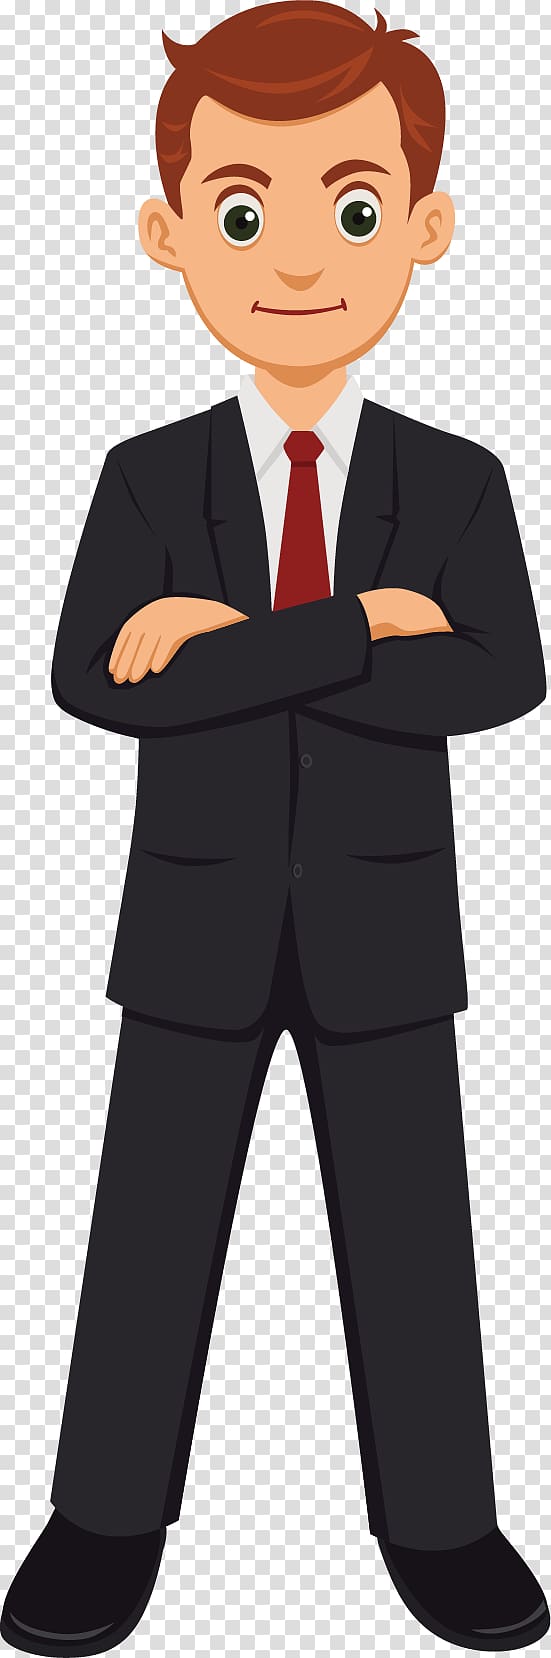 Man Wearing Black Suit And Red Tie Cartoon Cartoon Business Man